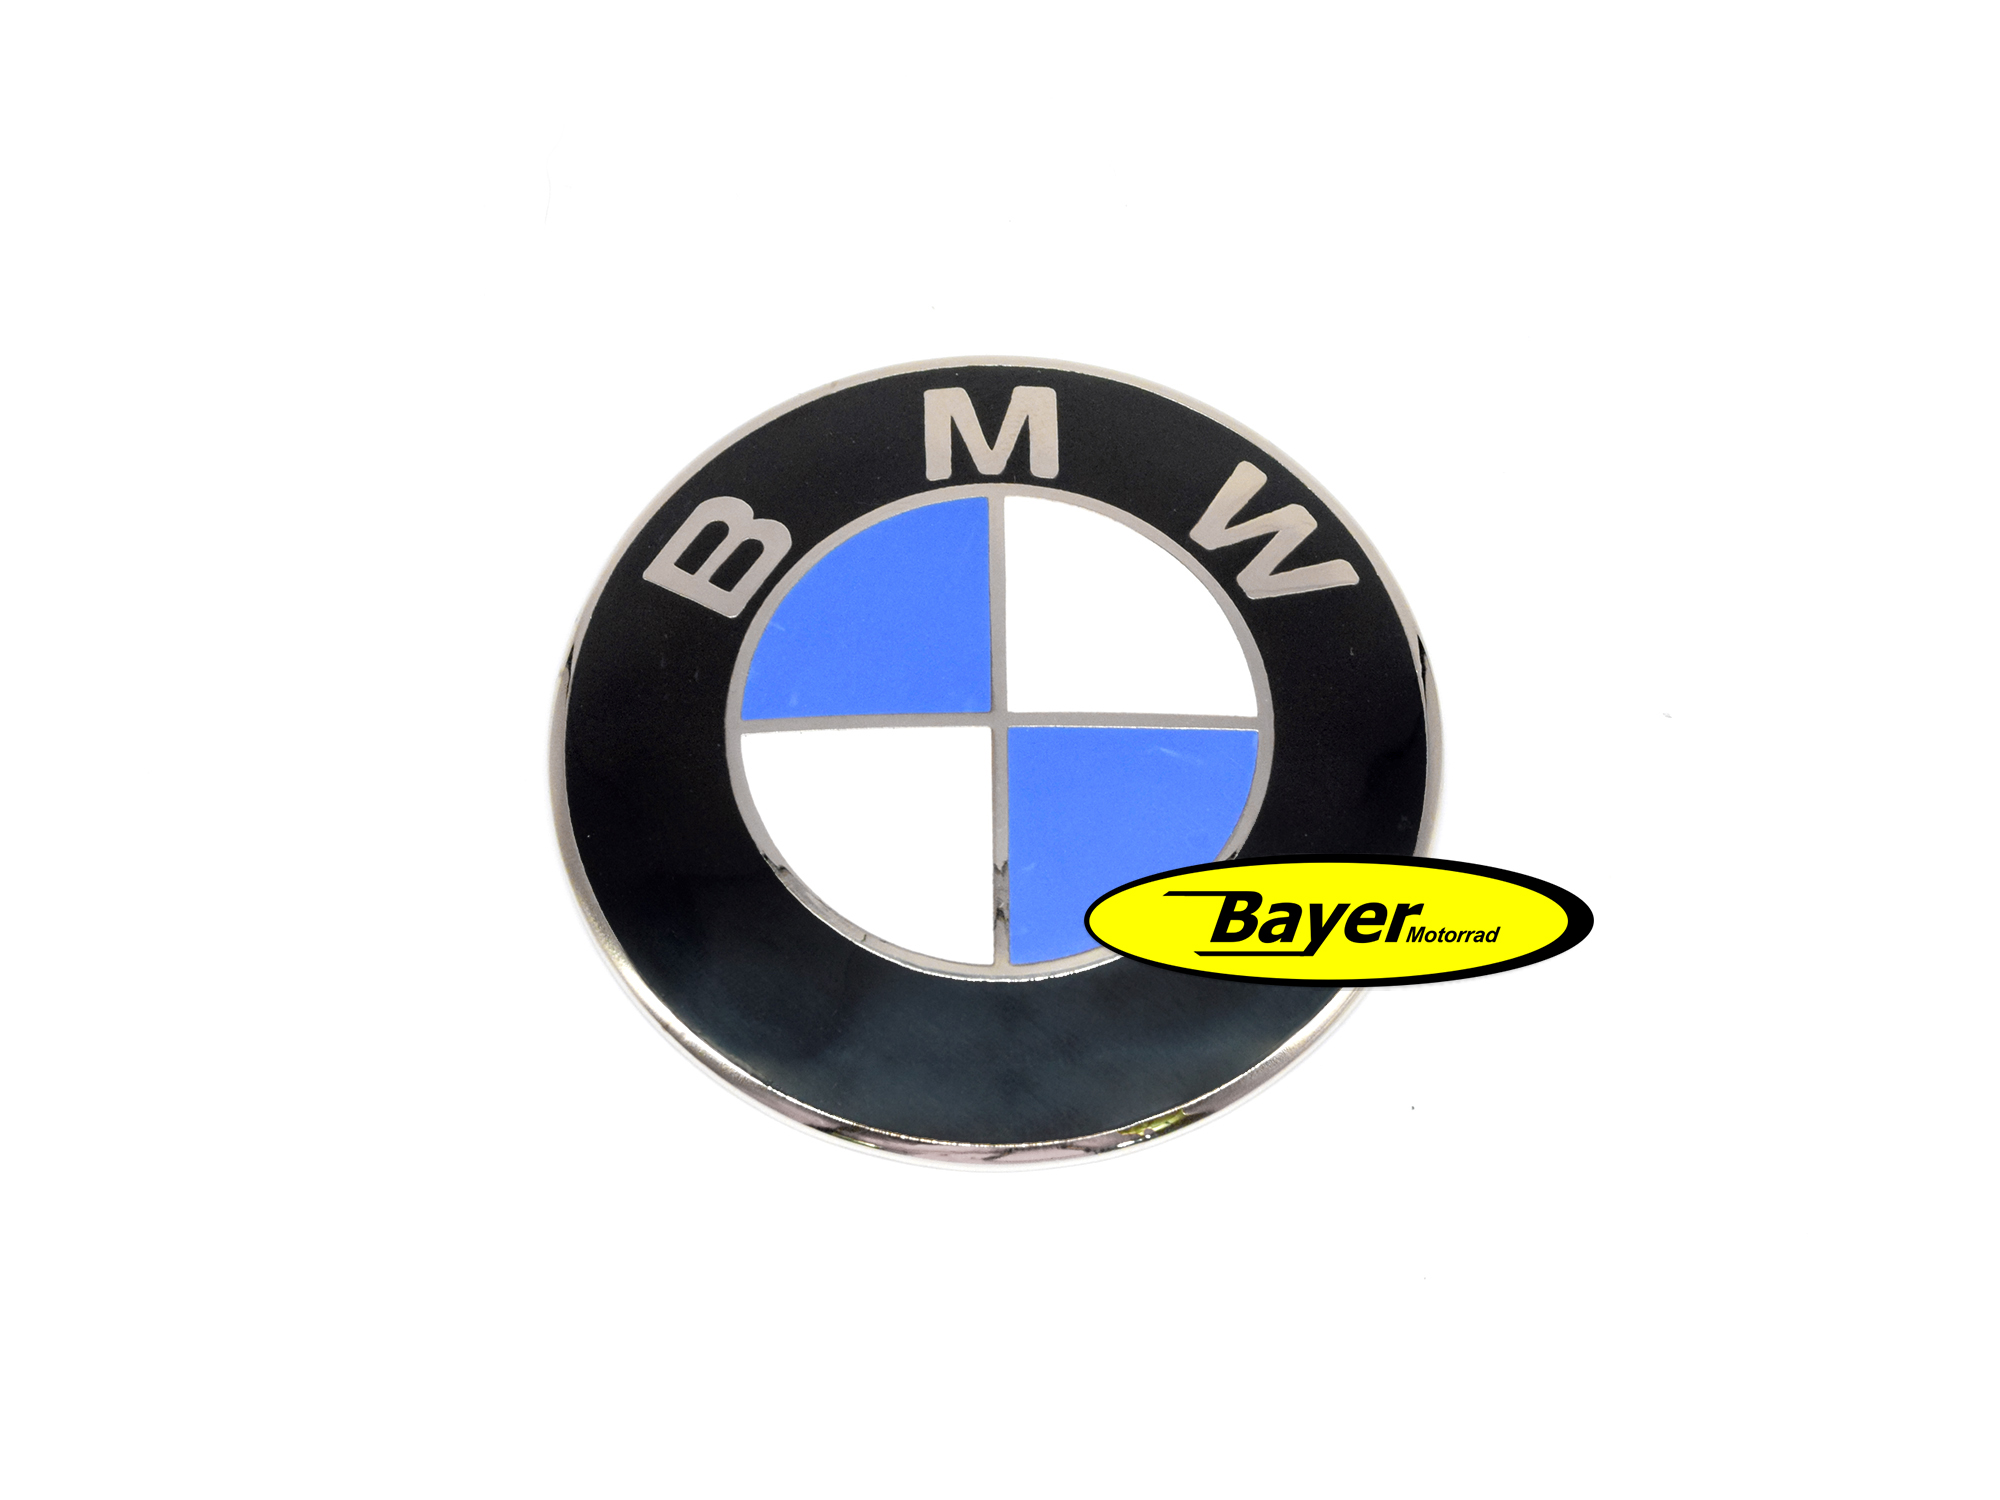 Emblema bmw 65mm metálico - Tresdesolution